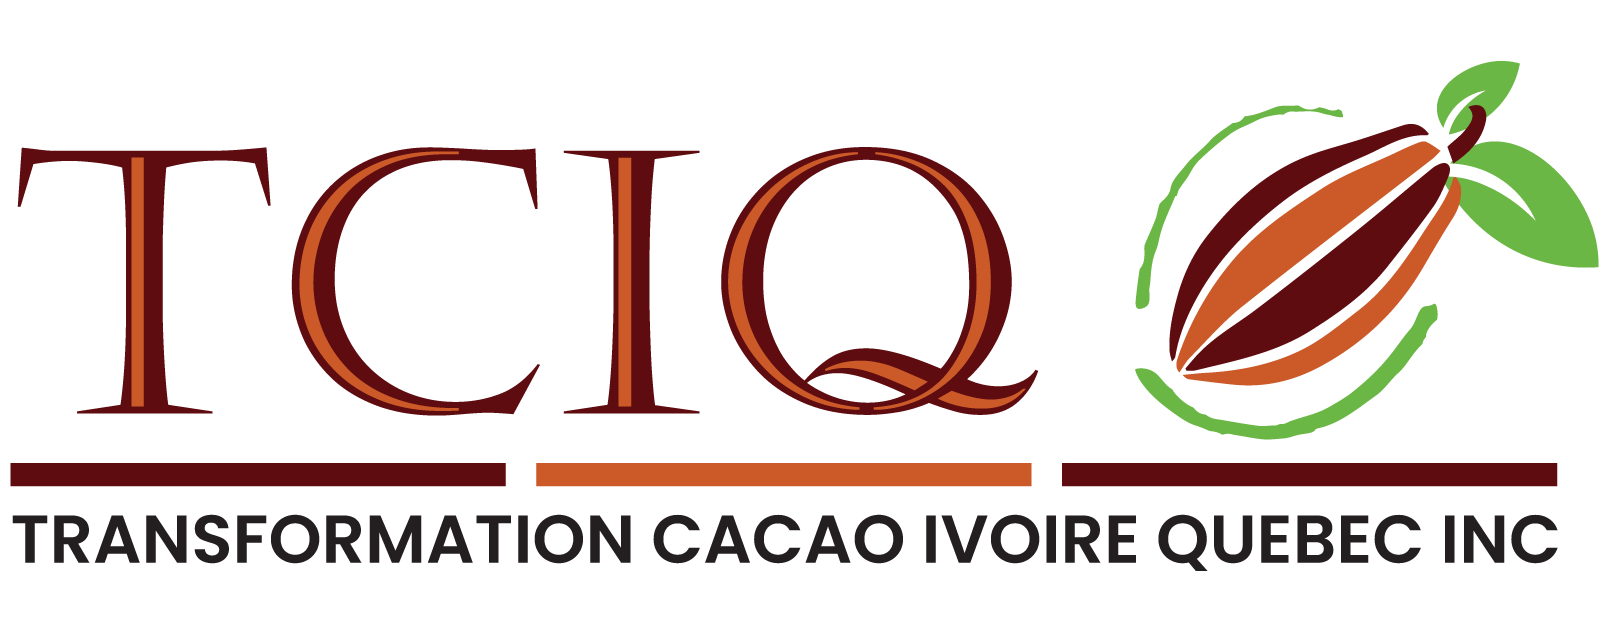 TRANSFORMATION CACAO IVOIRE QUÉBEC INC